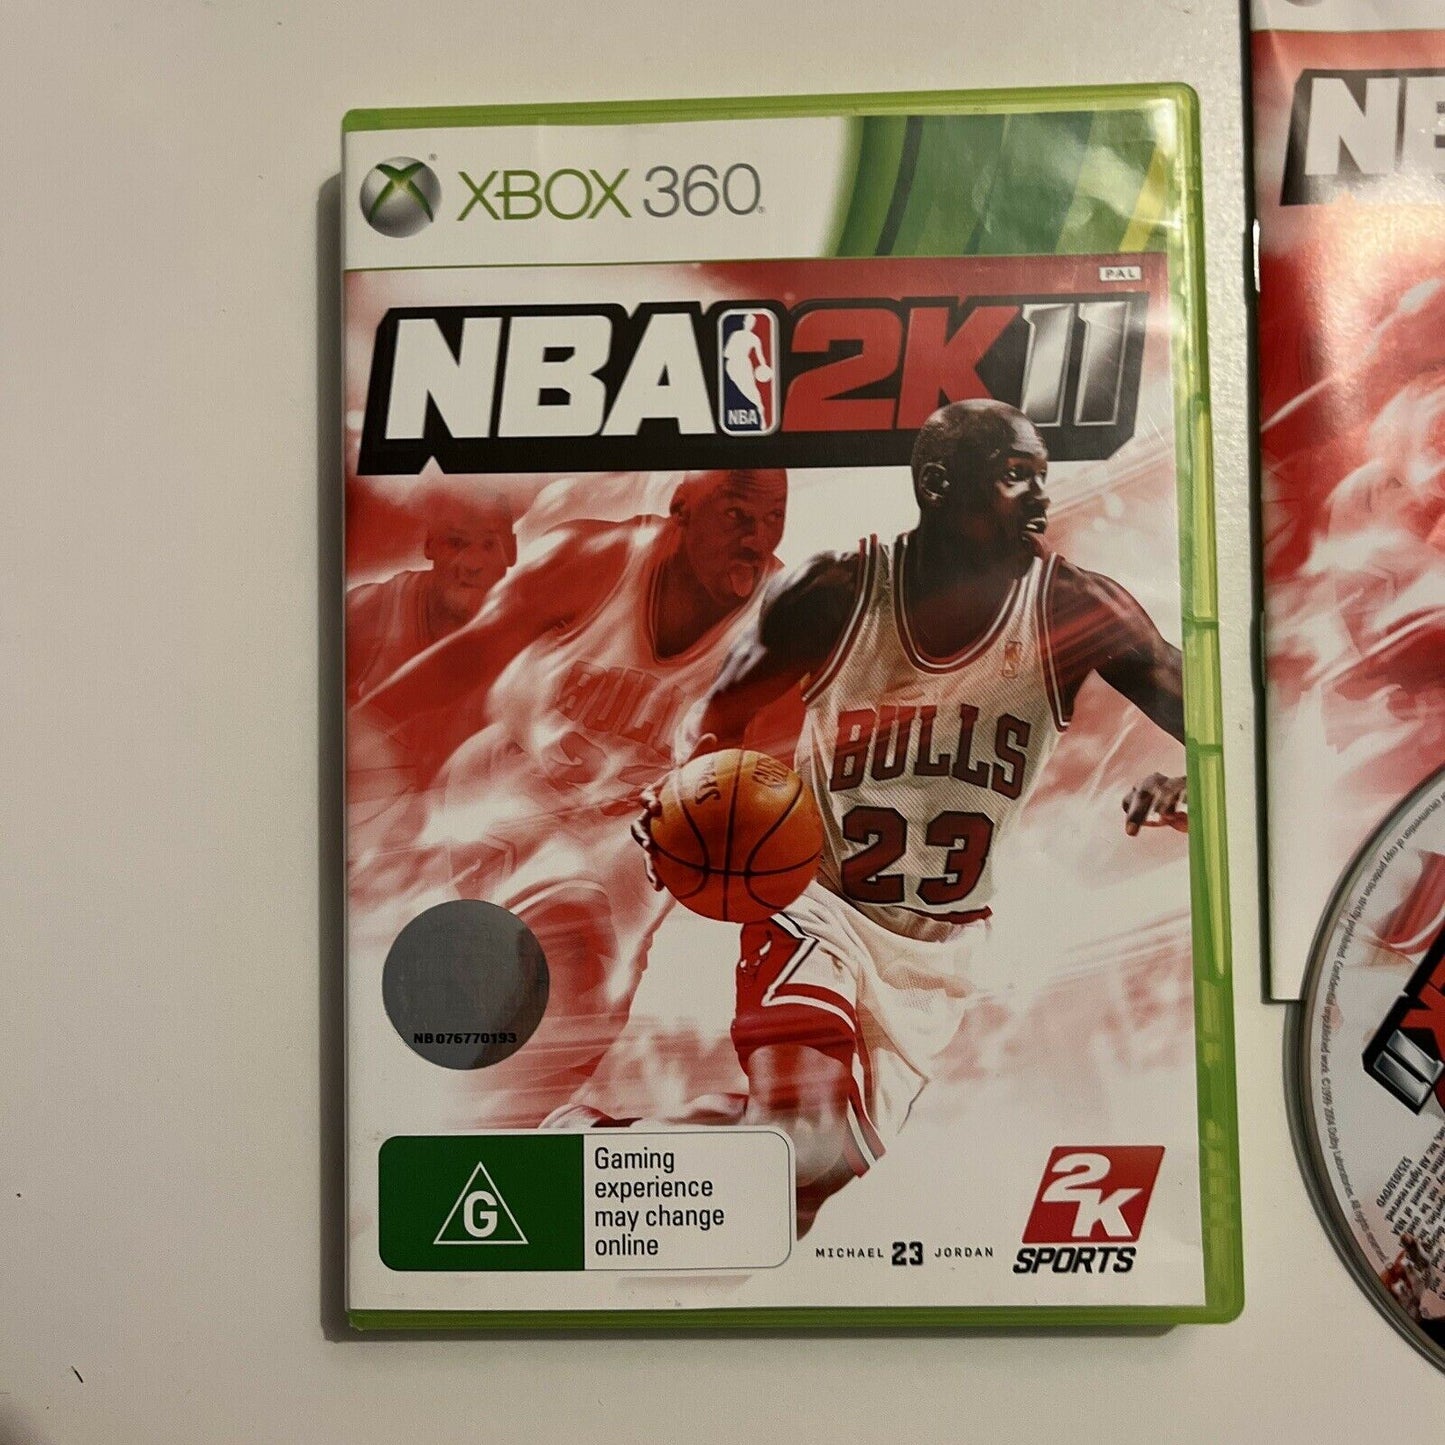 NBA 2K11 - Microsoft Xbox 360 PAL Game Complete with Manual Michael Jordan Cover